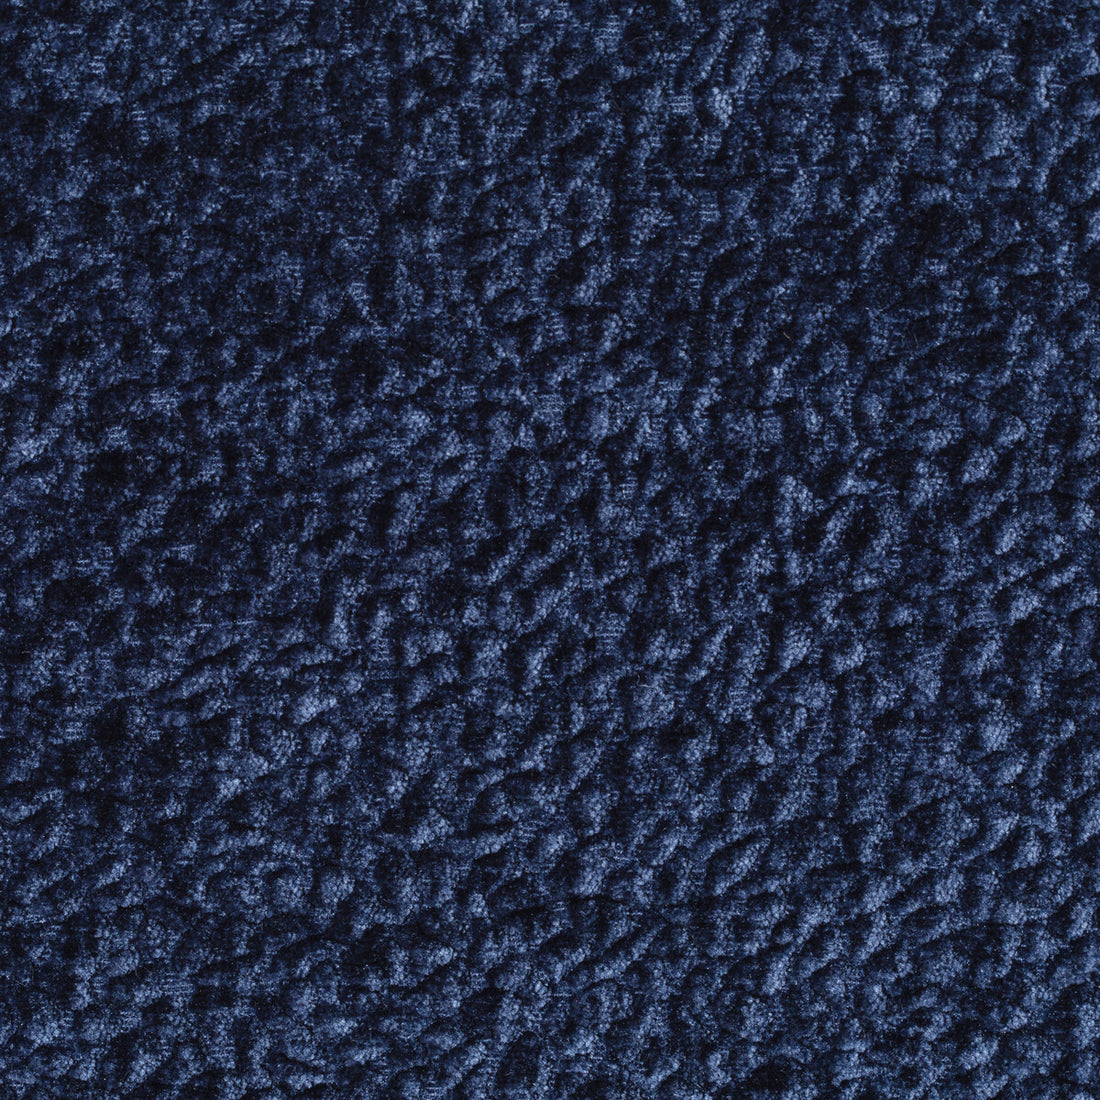 Barton Chenille fabric in indigo color - pattern 36074.5.0 - by Kravet Smart